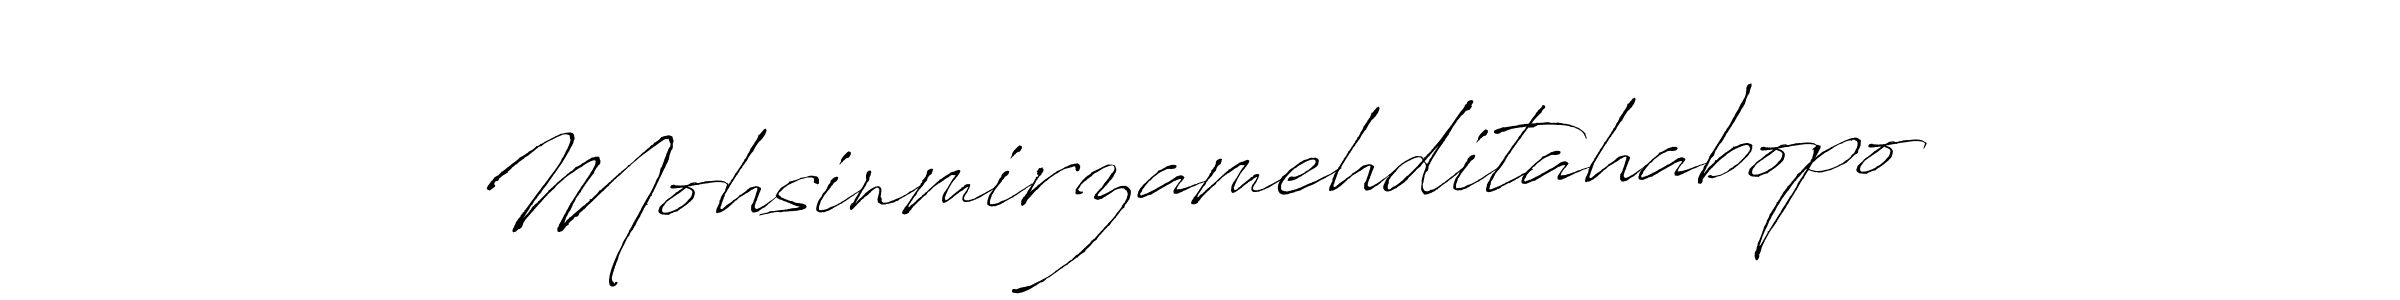 Mohsinmirzamehditahabopo stylish signature style. Best Handwritten Sign (Antro_Vectra) for my name. Handwritten Signature Collection Ideas for my name Mohsinmirzamehditahabopo. Mohsinmirzamehditahabopo signature style 6 images and pictures png